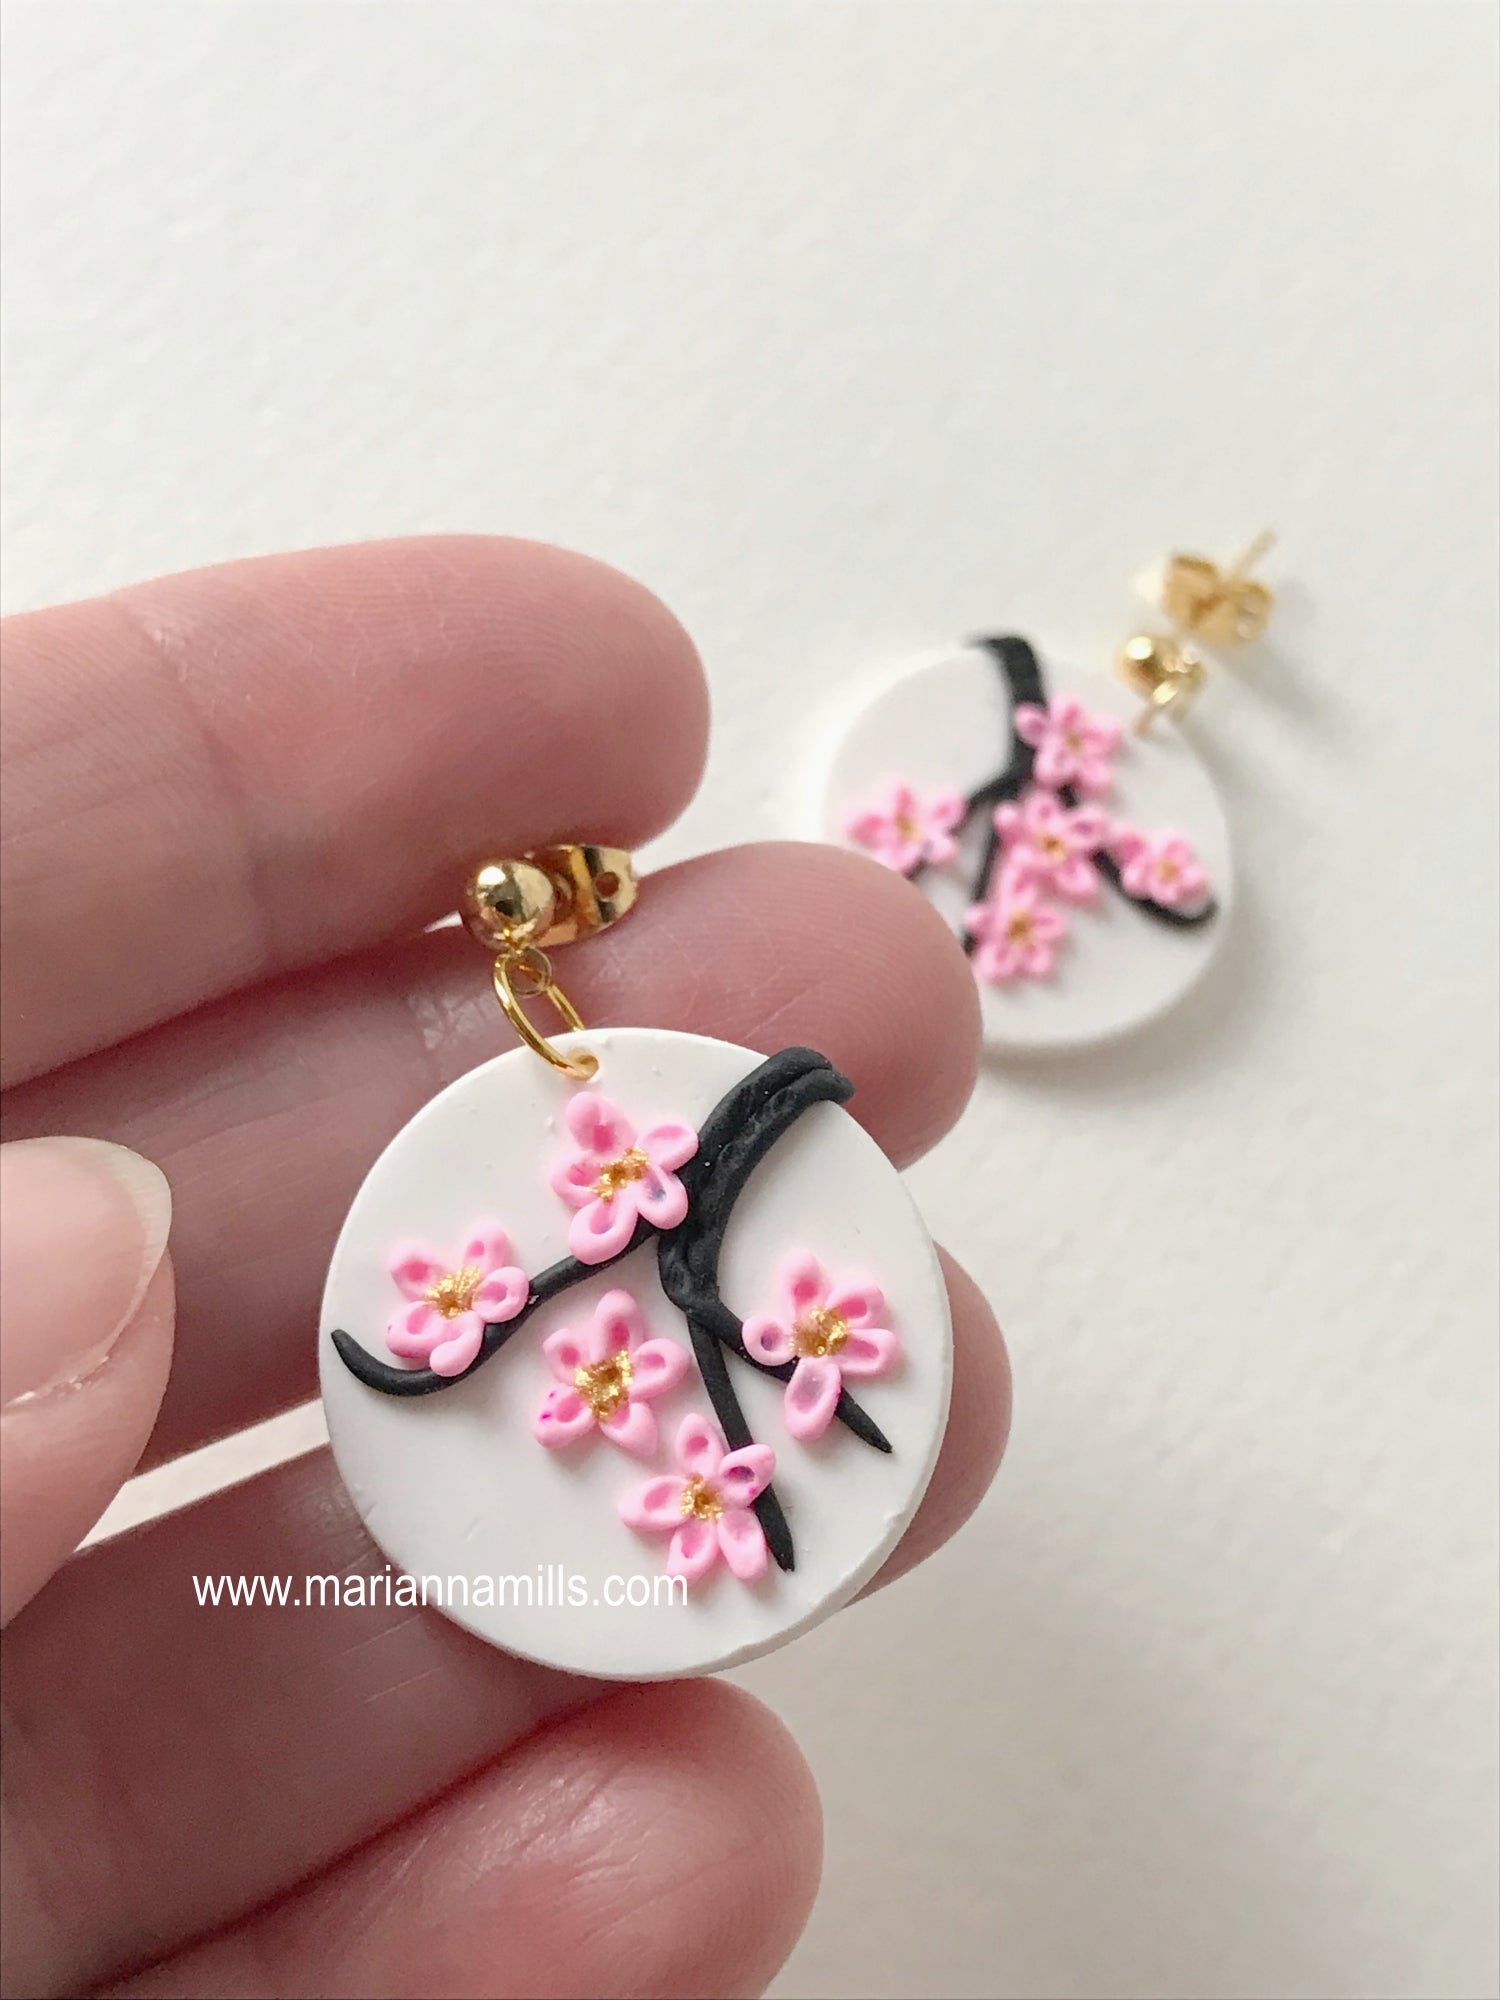 Sakura Tree - Artisan Statement Post Earrings Handmade by Marianna Mills